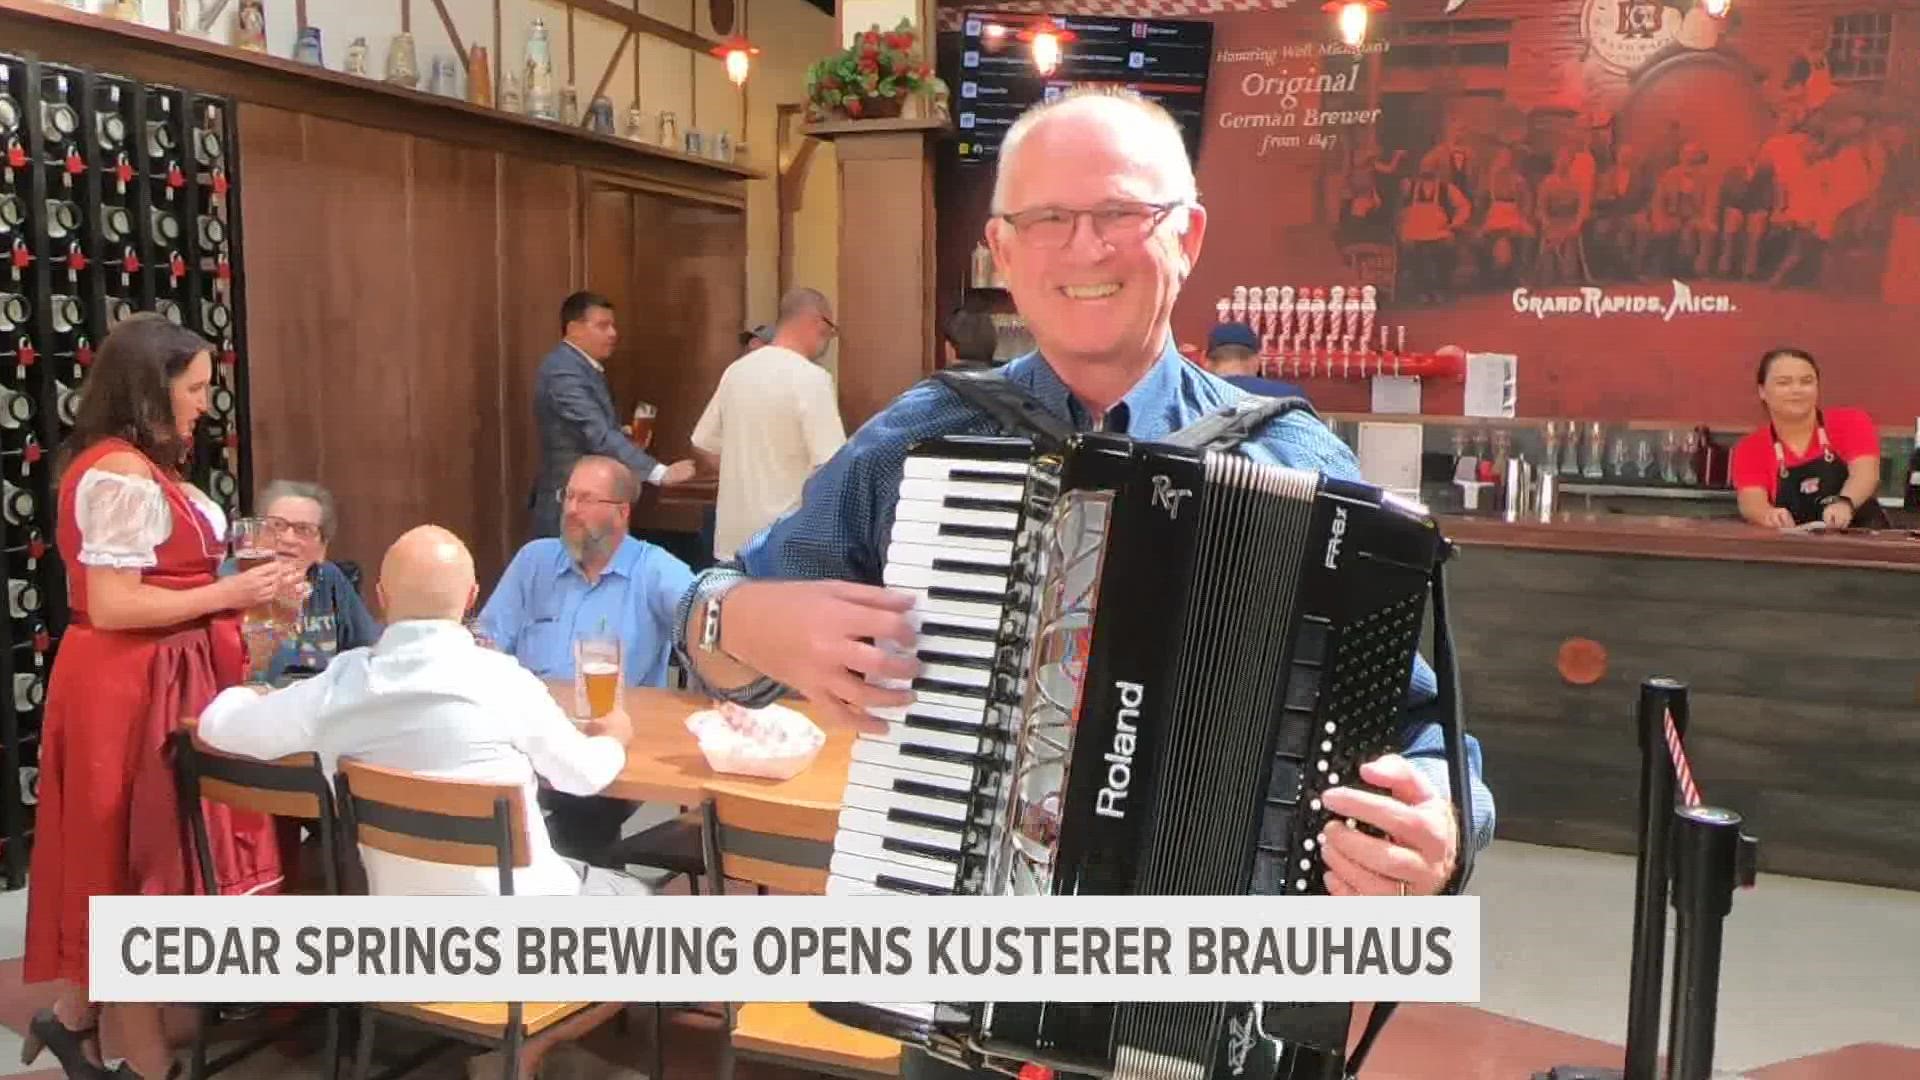 Cedar Springs has opened a new beer call, named Kusterer Brauhaus.